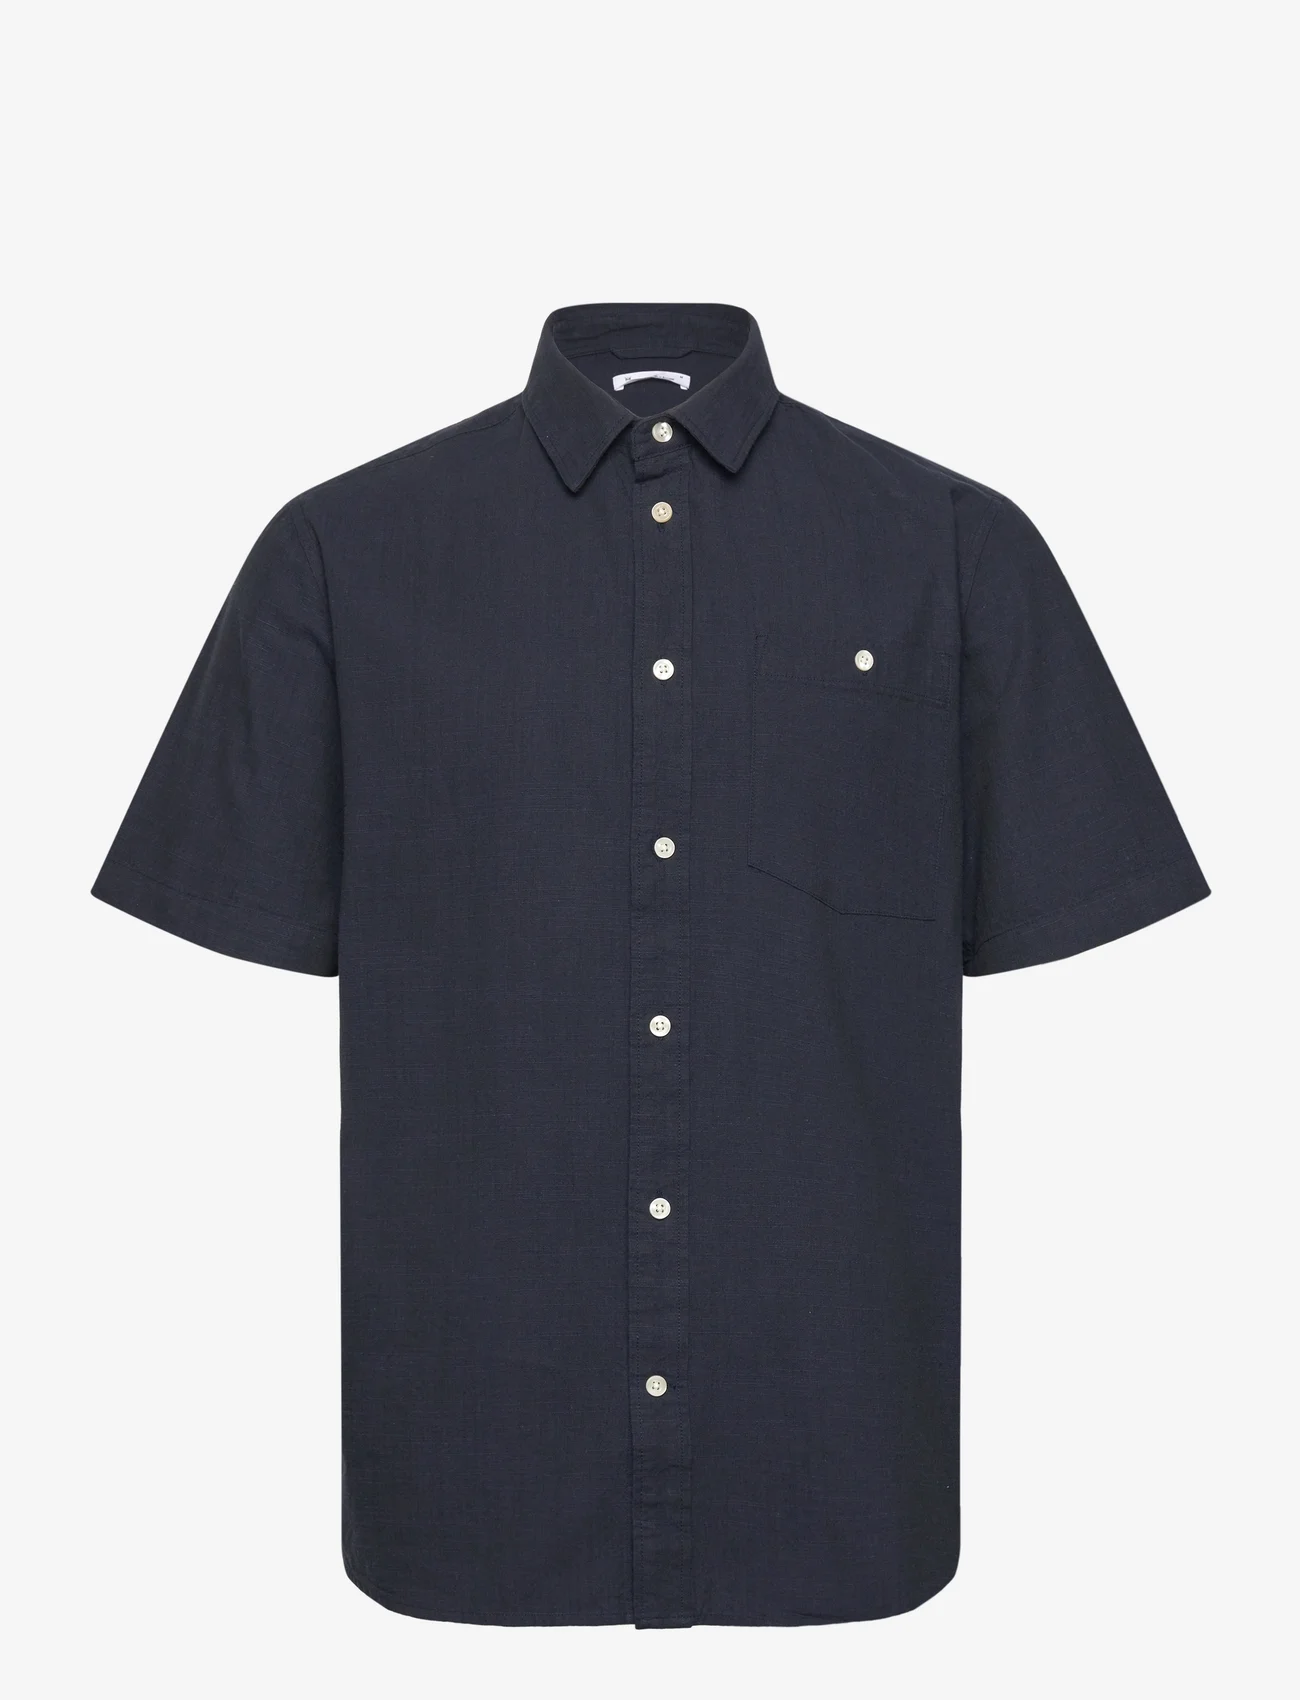 Knowledge Cotton Apparel - Regular linen look short sleeve shi - chemises à manches courtes - total eclipse - 0